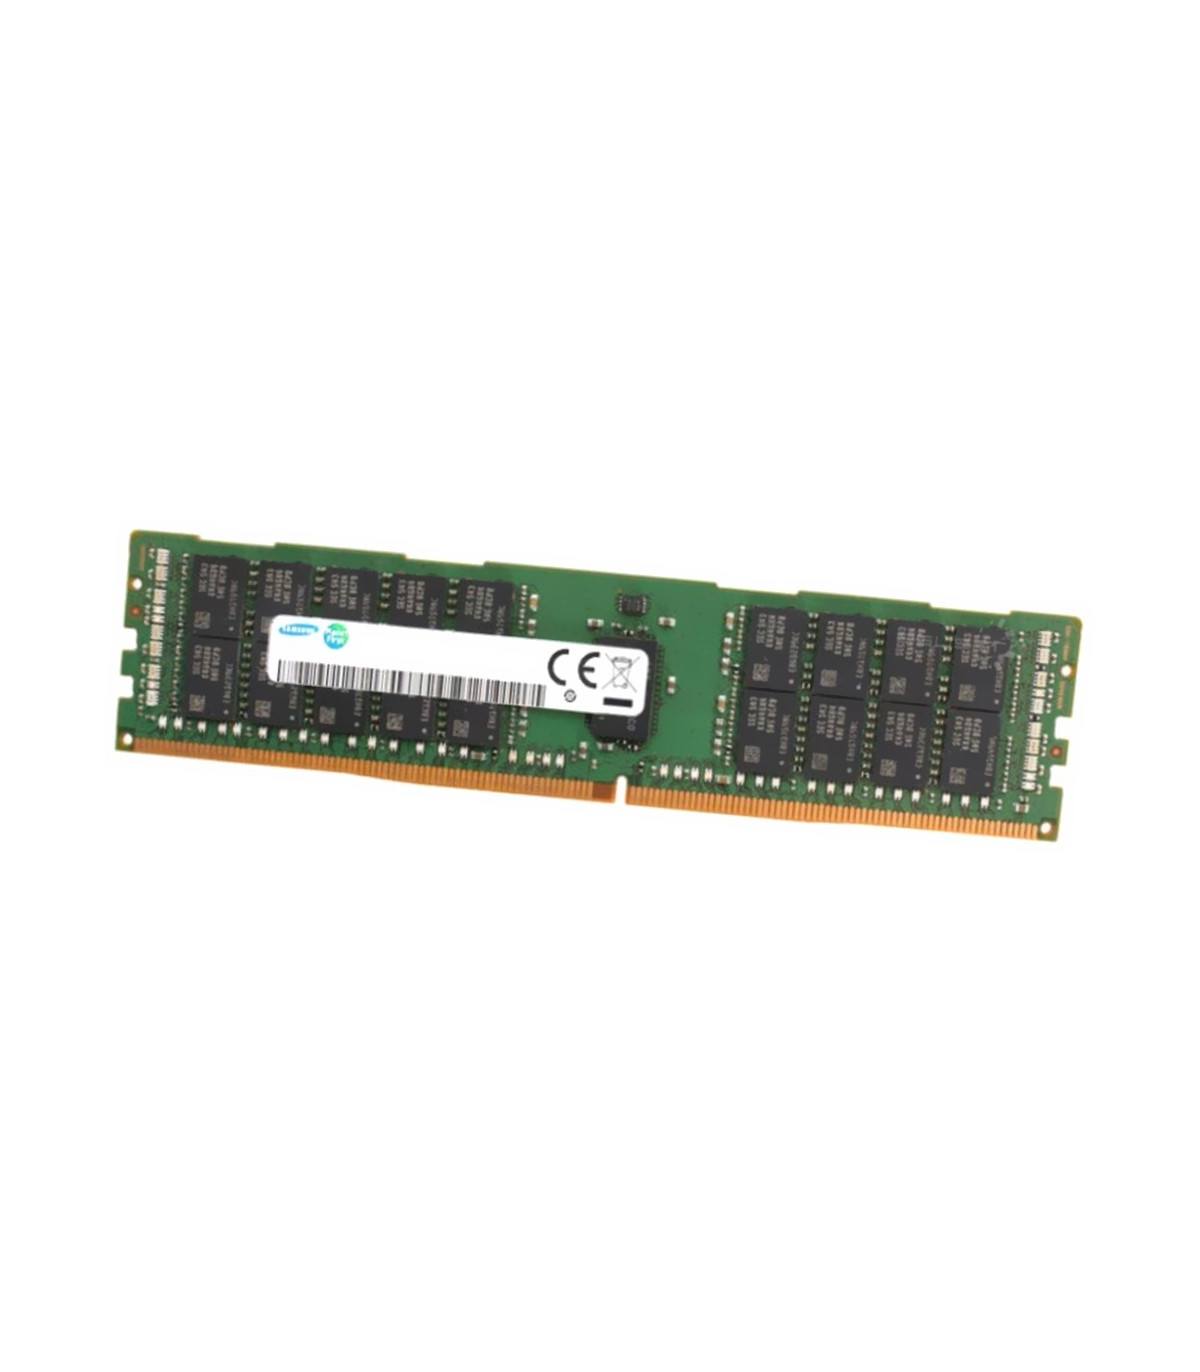 RAM SAMSUNG 16GB 2Rx4 PC4 2133P CN M393A2G40EB1-CPB 1544